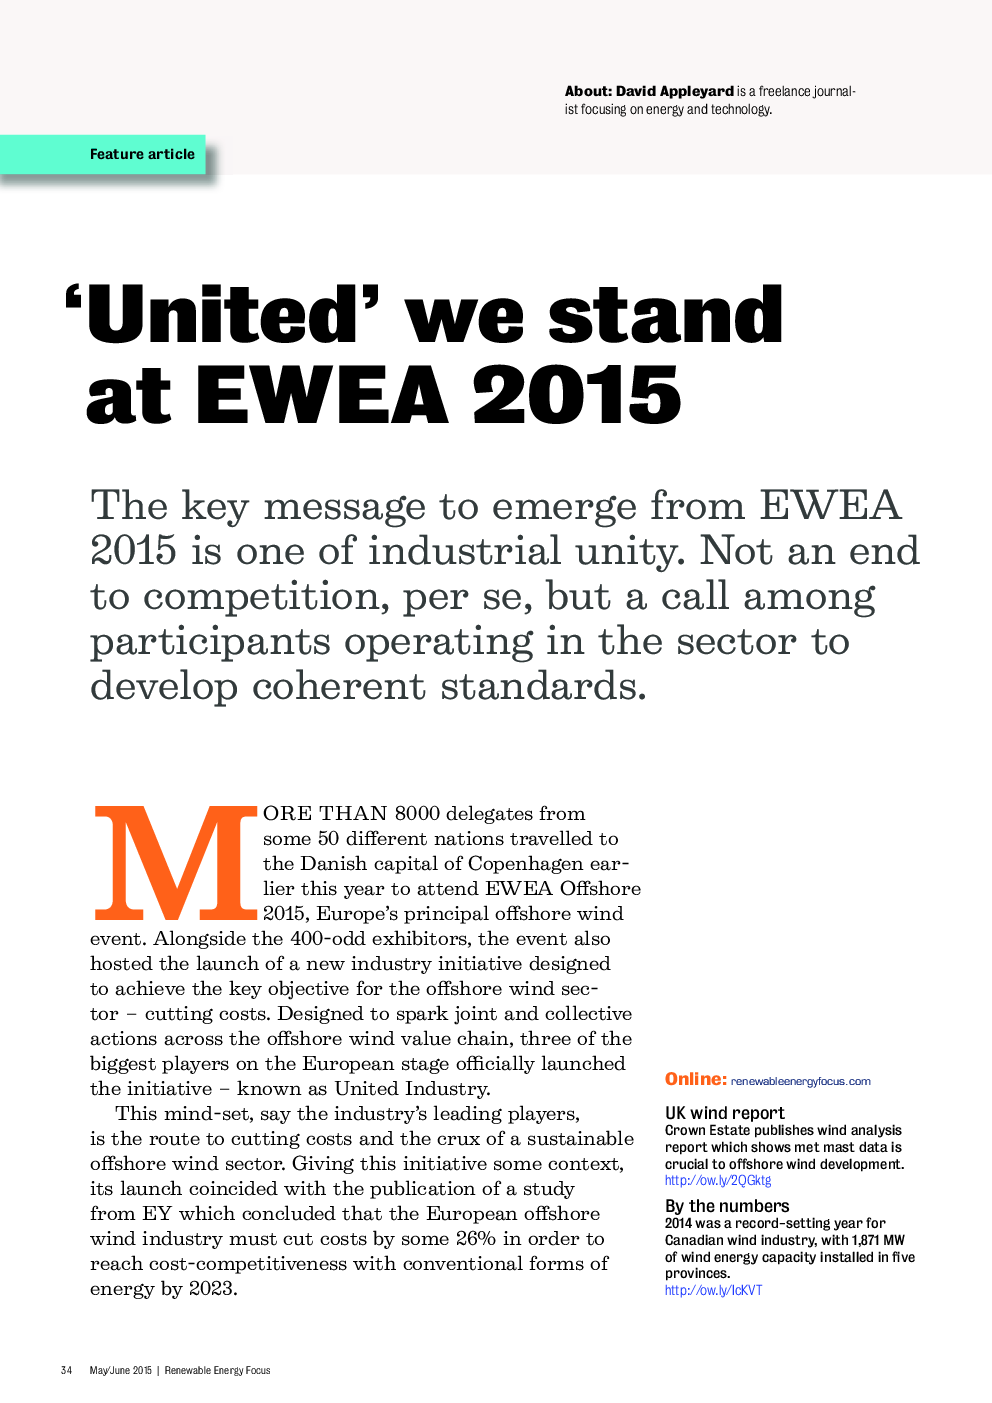 ‘United’ we stand at EWEA 2015